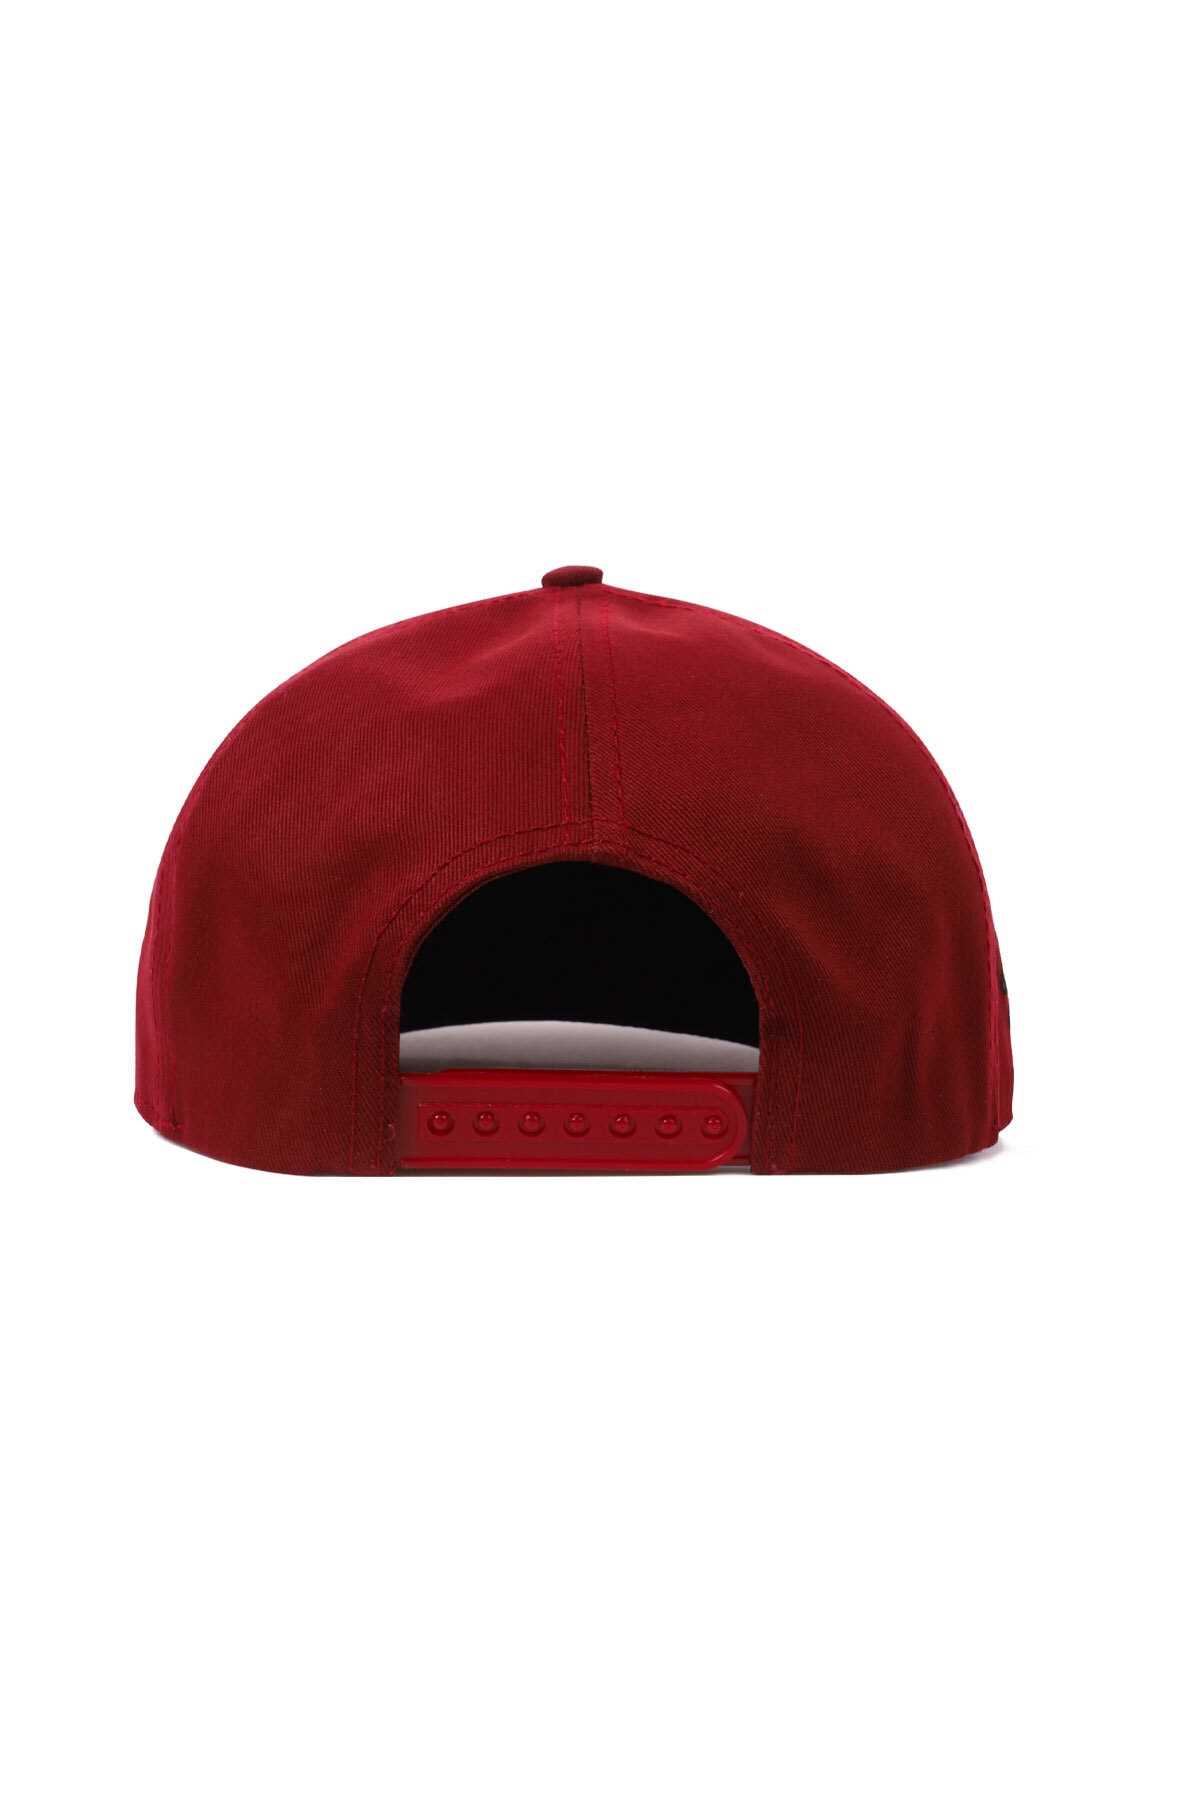 فروش کلاه مردانه جدید شیک LEATHIFY رنگ زرشکی ty218097023